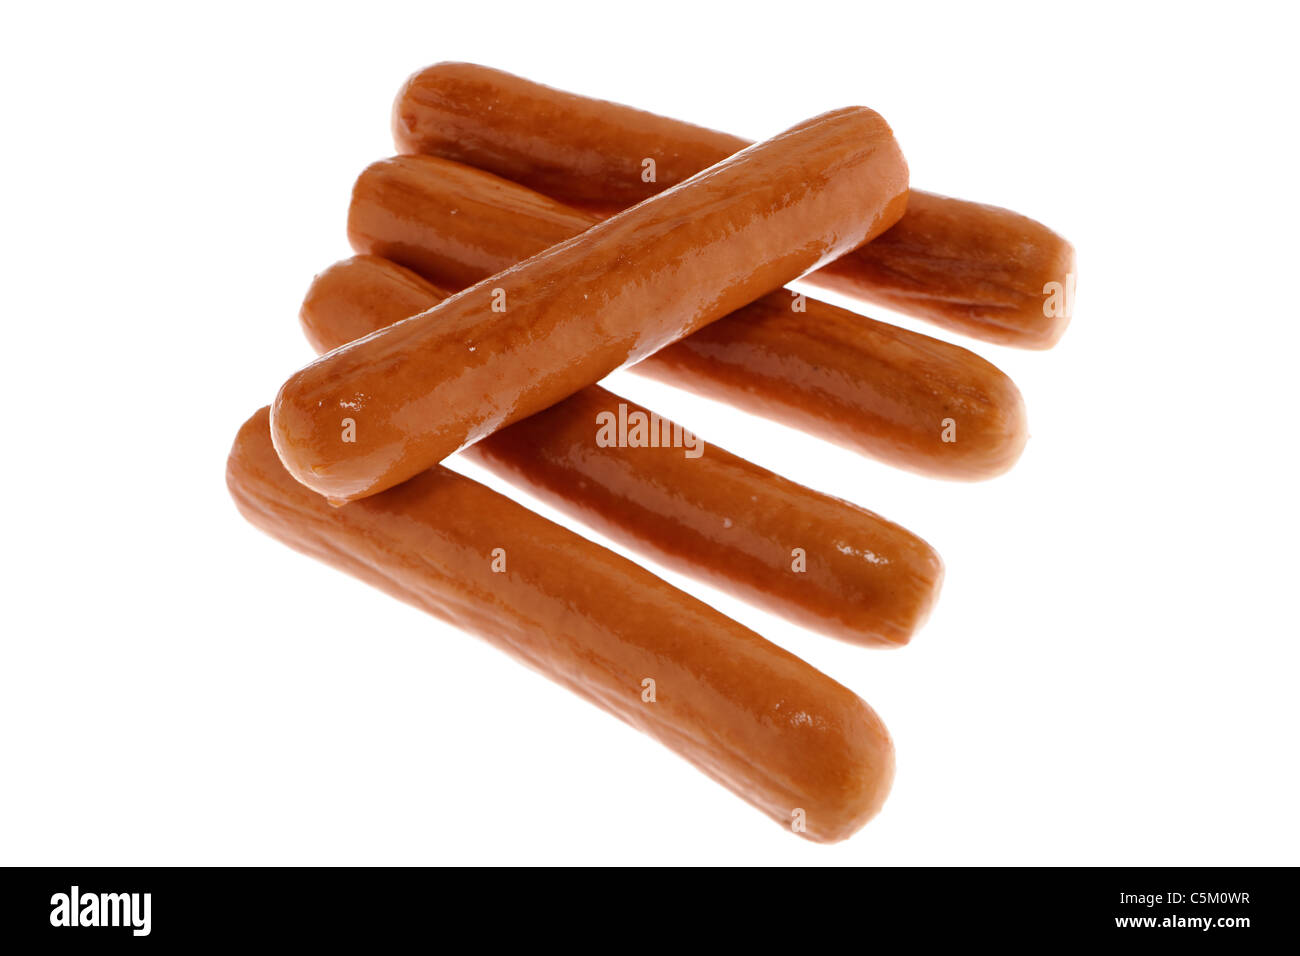 Five hot dog sausages Stock Photo